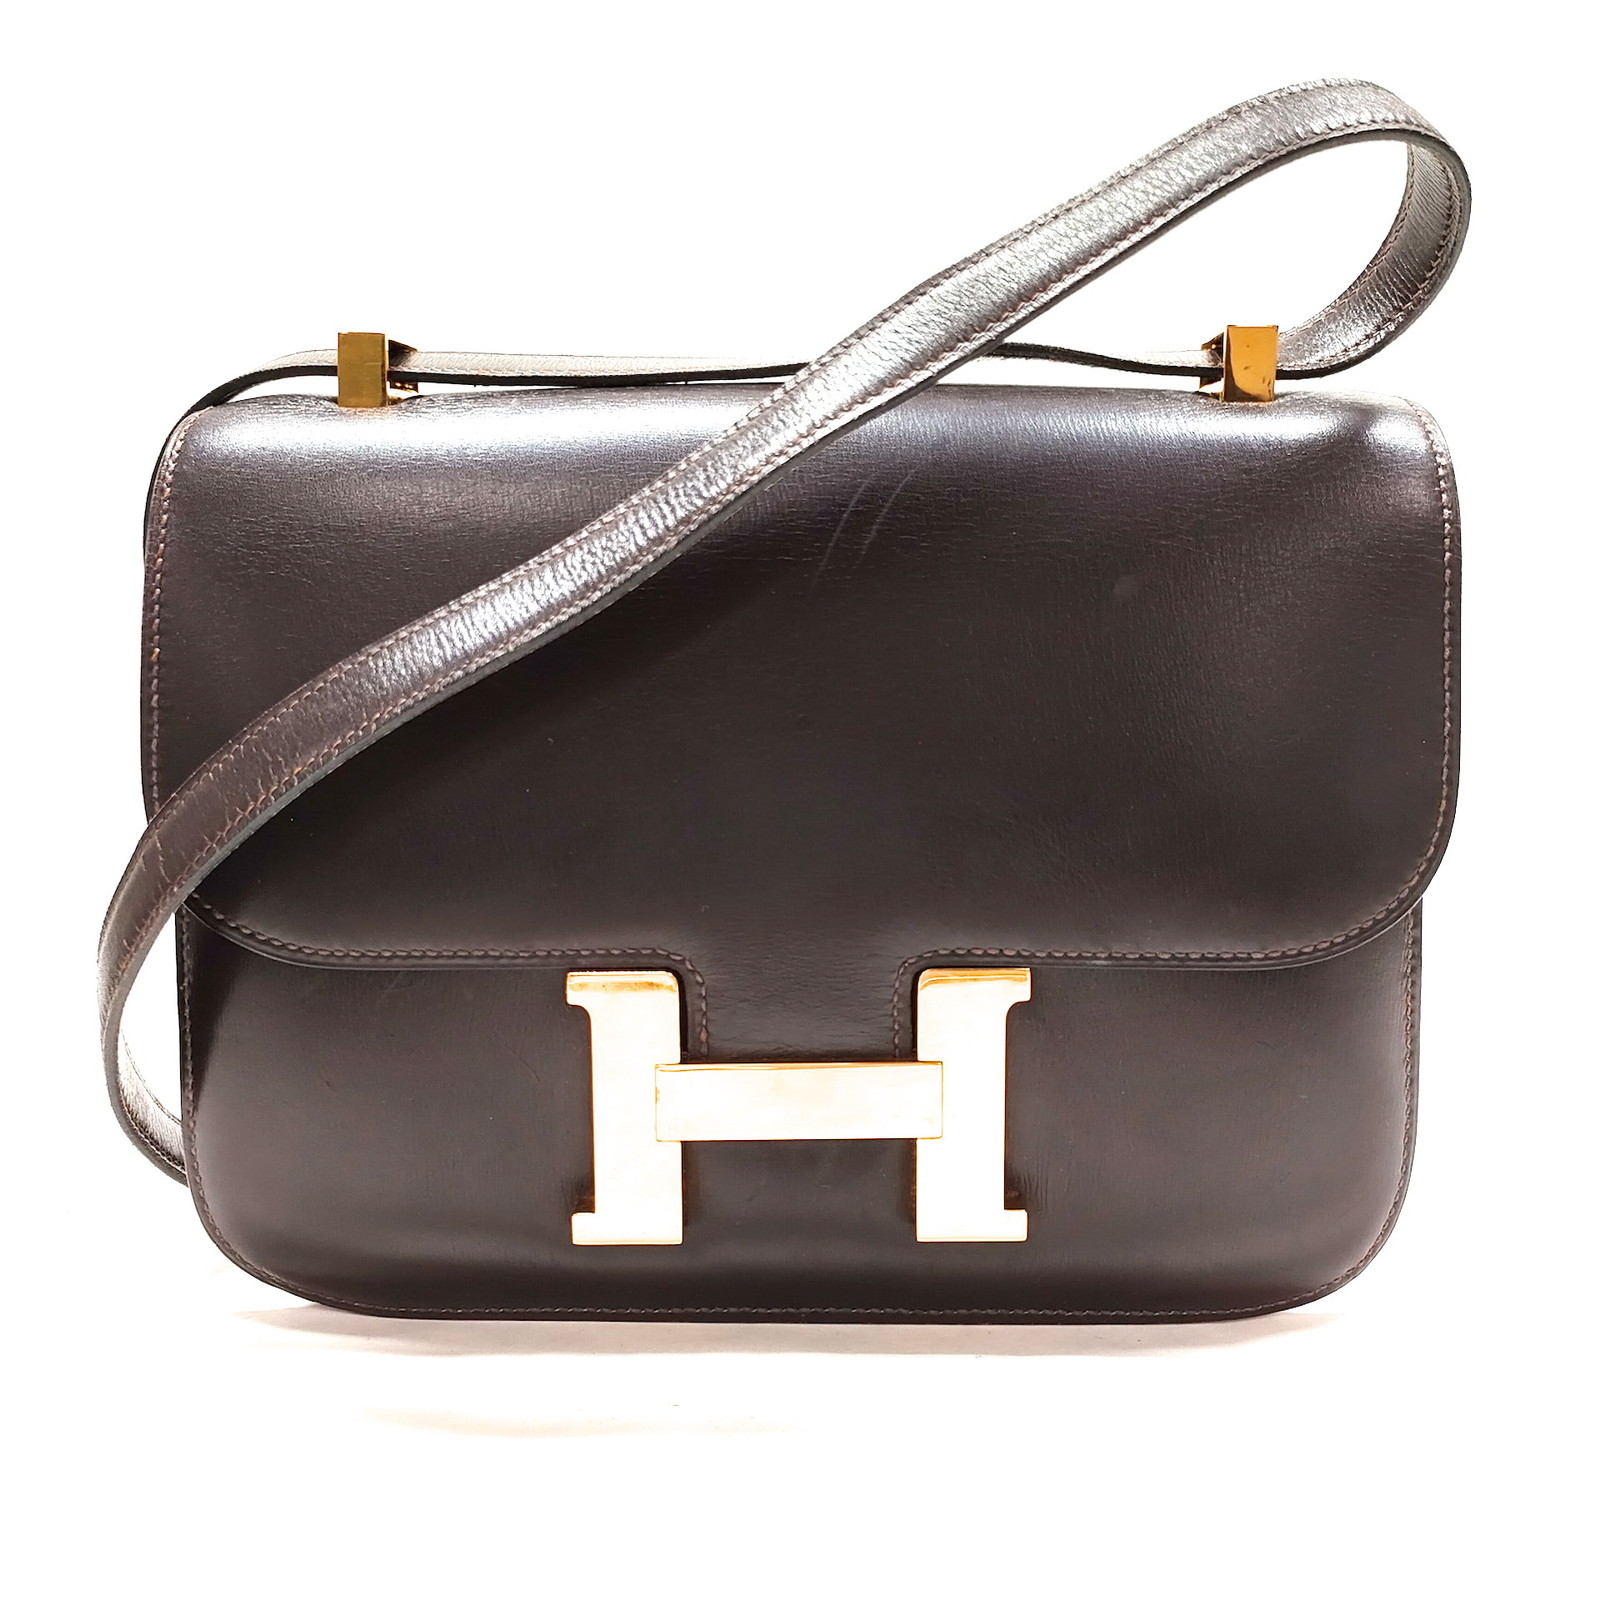 HERMES Constance Elan Shoulder Bag Japan ookura | eBay